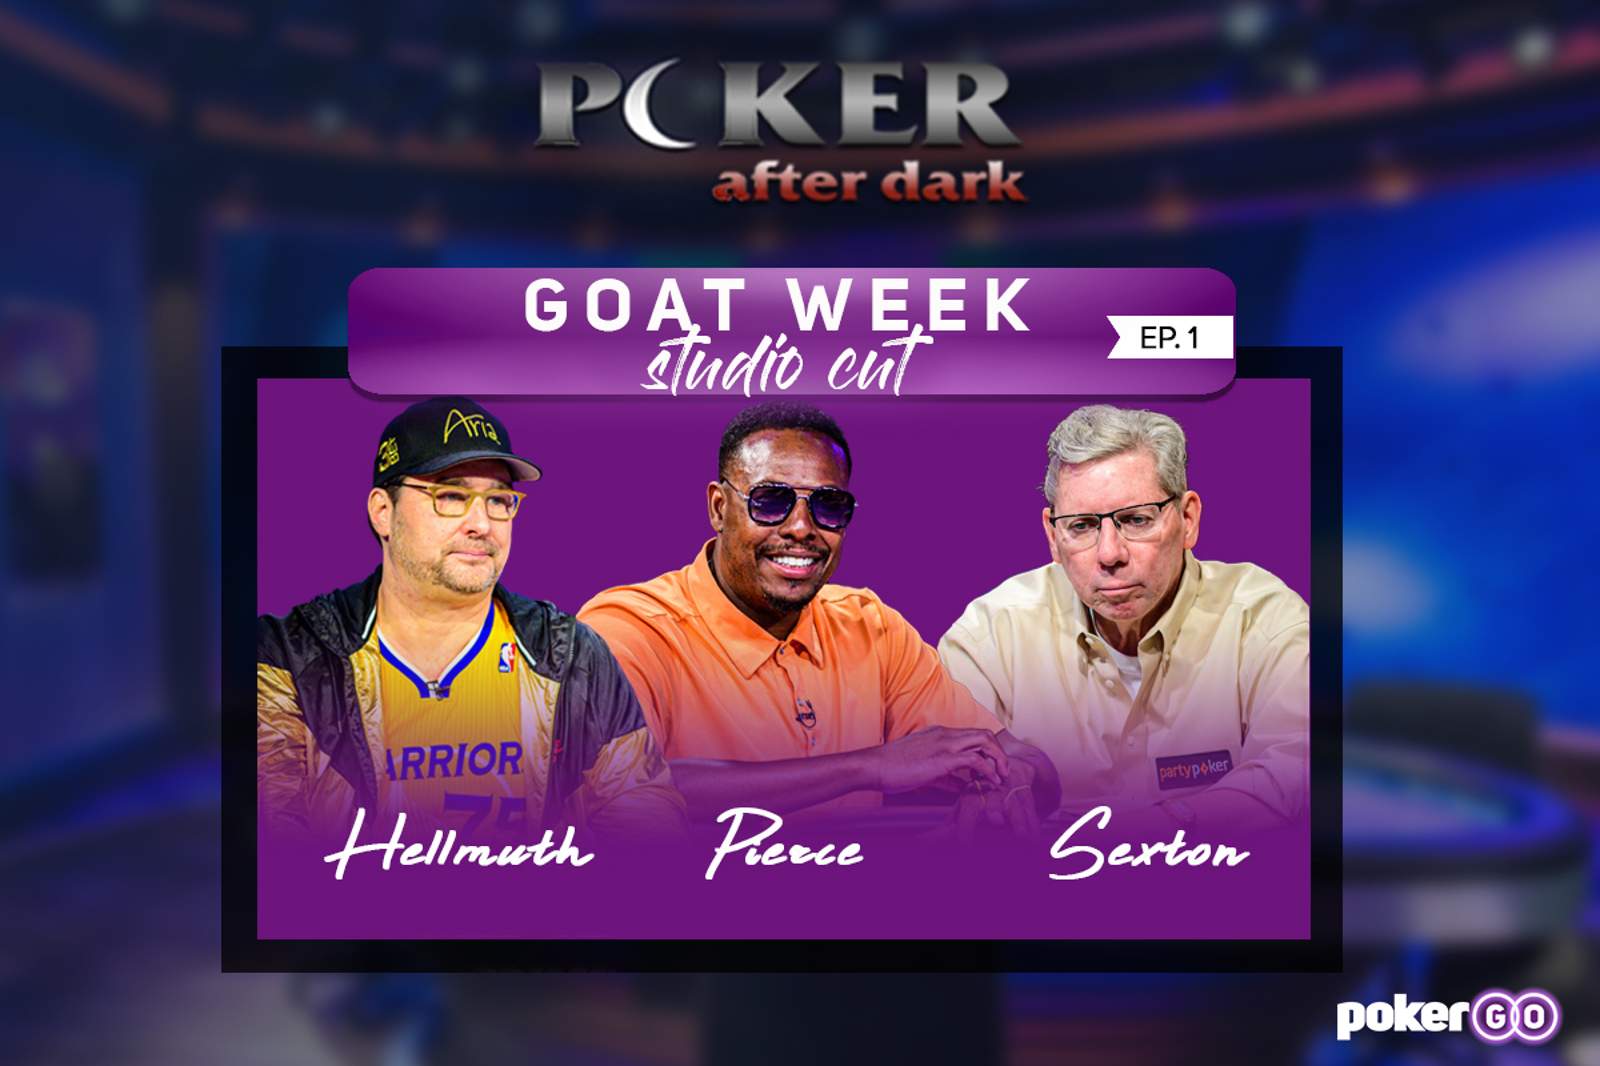 Poker After Dark Studio Cut on Tonight with Paul Pierce & Phil Hellmuth